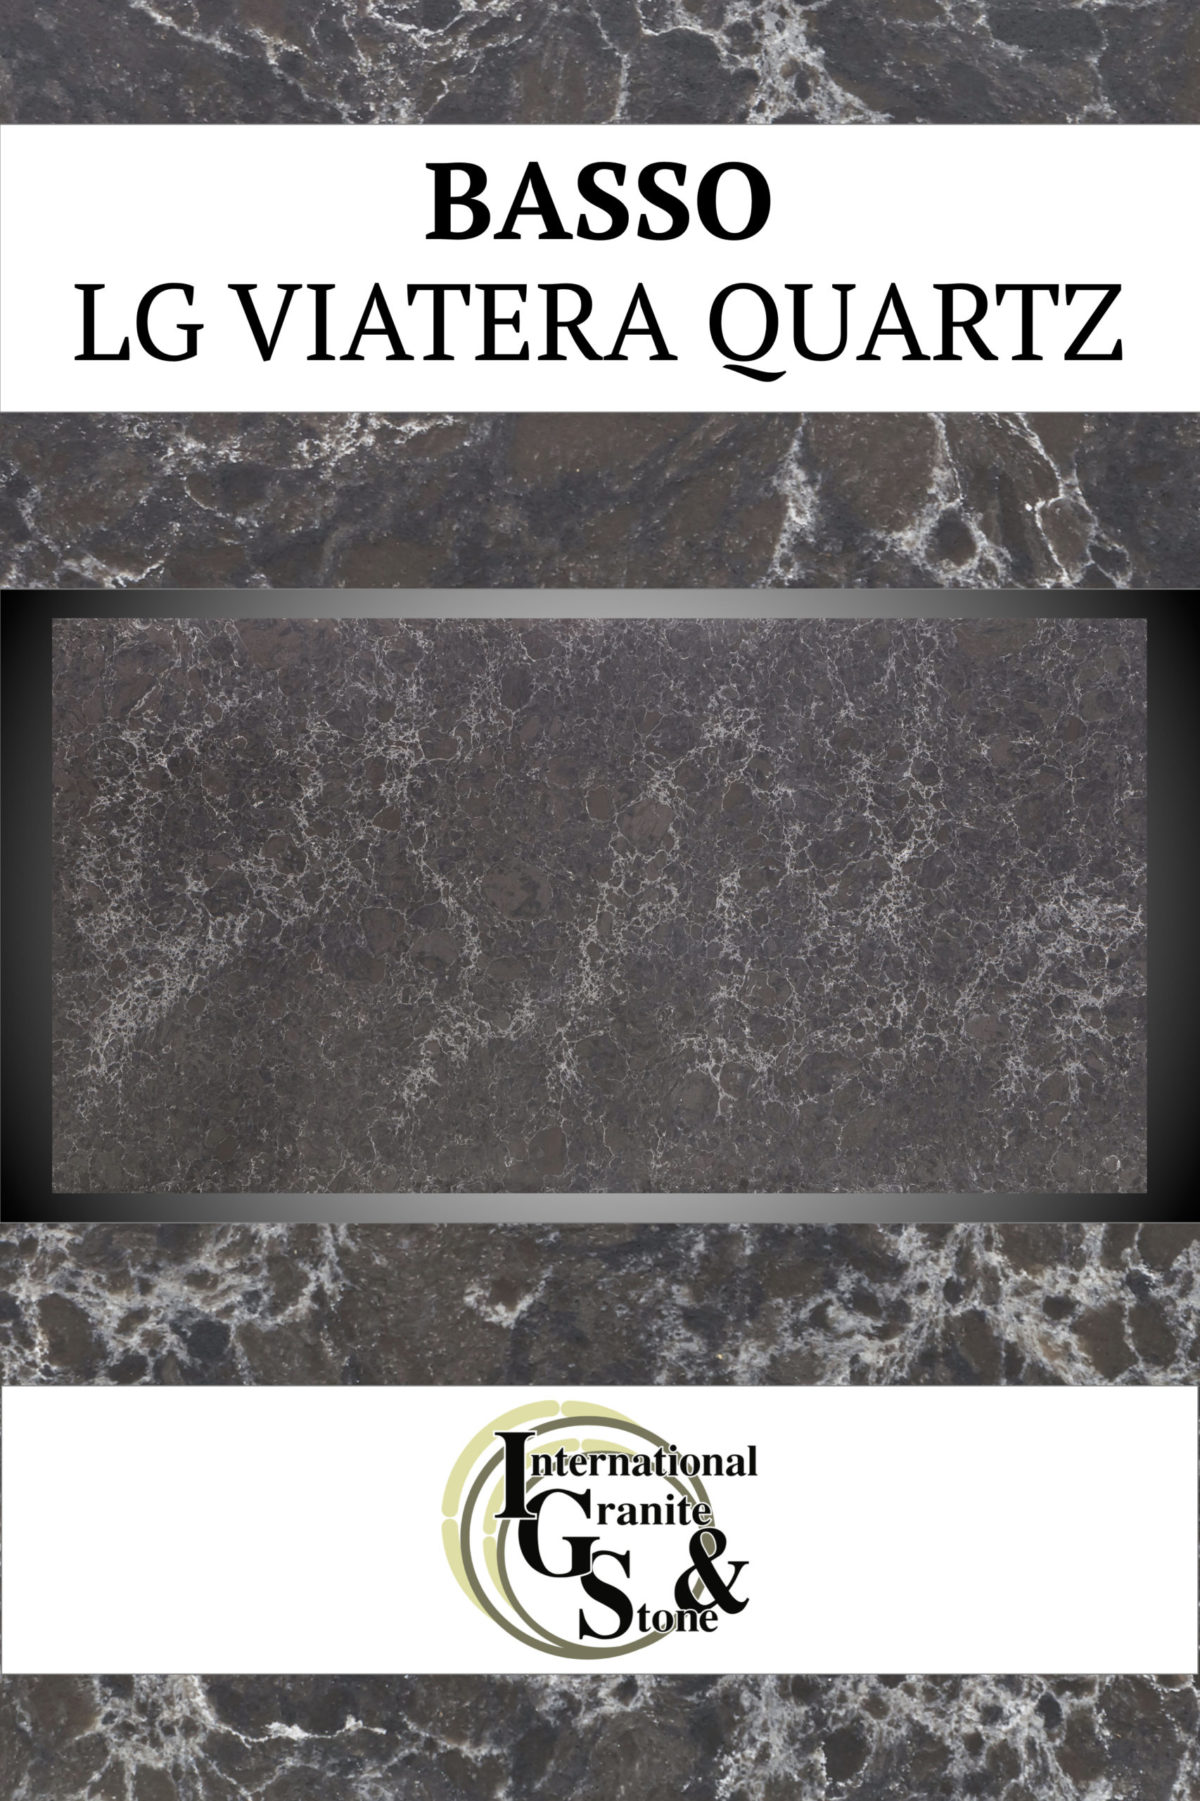 Basso LG Viatera Quartz Countertops